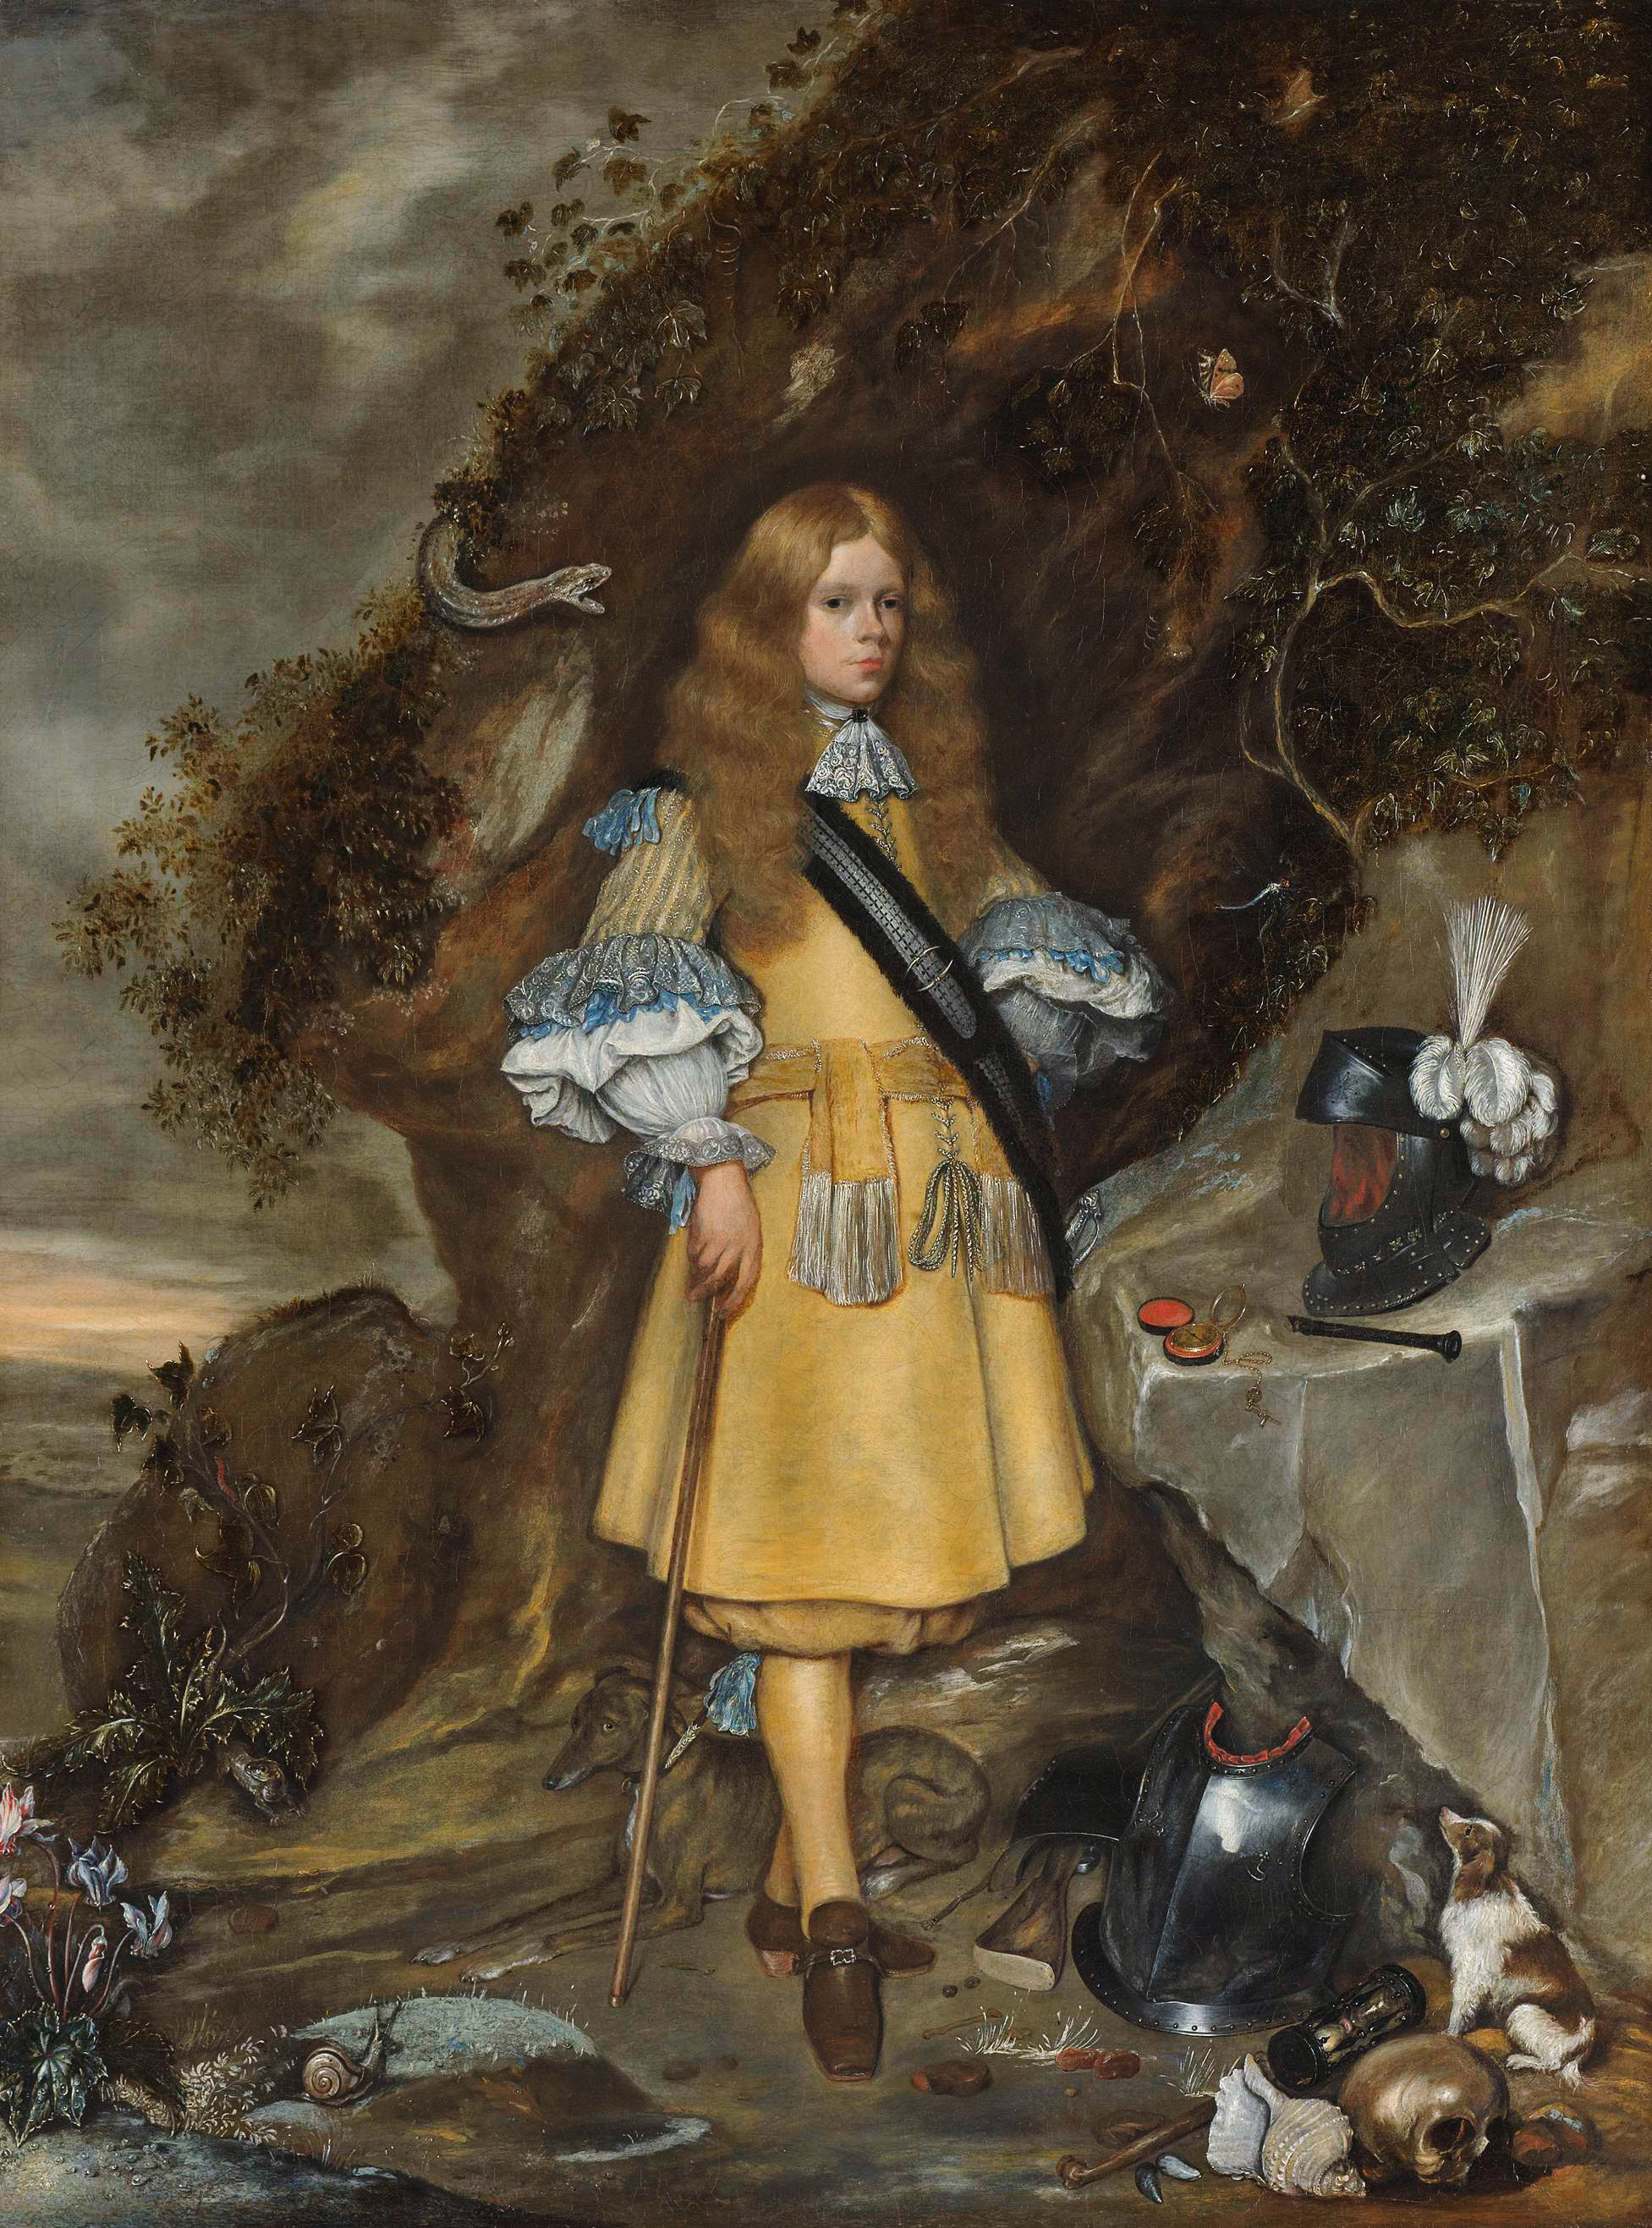 Borch__Gerard_Ter_II_and_Borch__Gesina_-_Memorial_Portrait_of_Moses_ter_Borch_-_1667-69